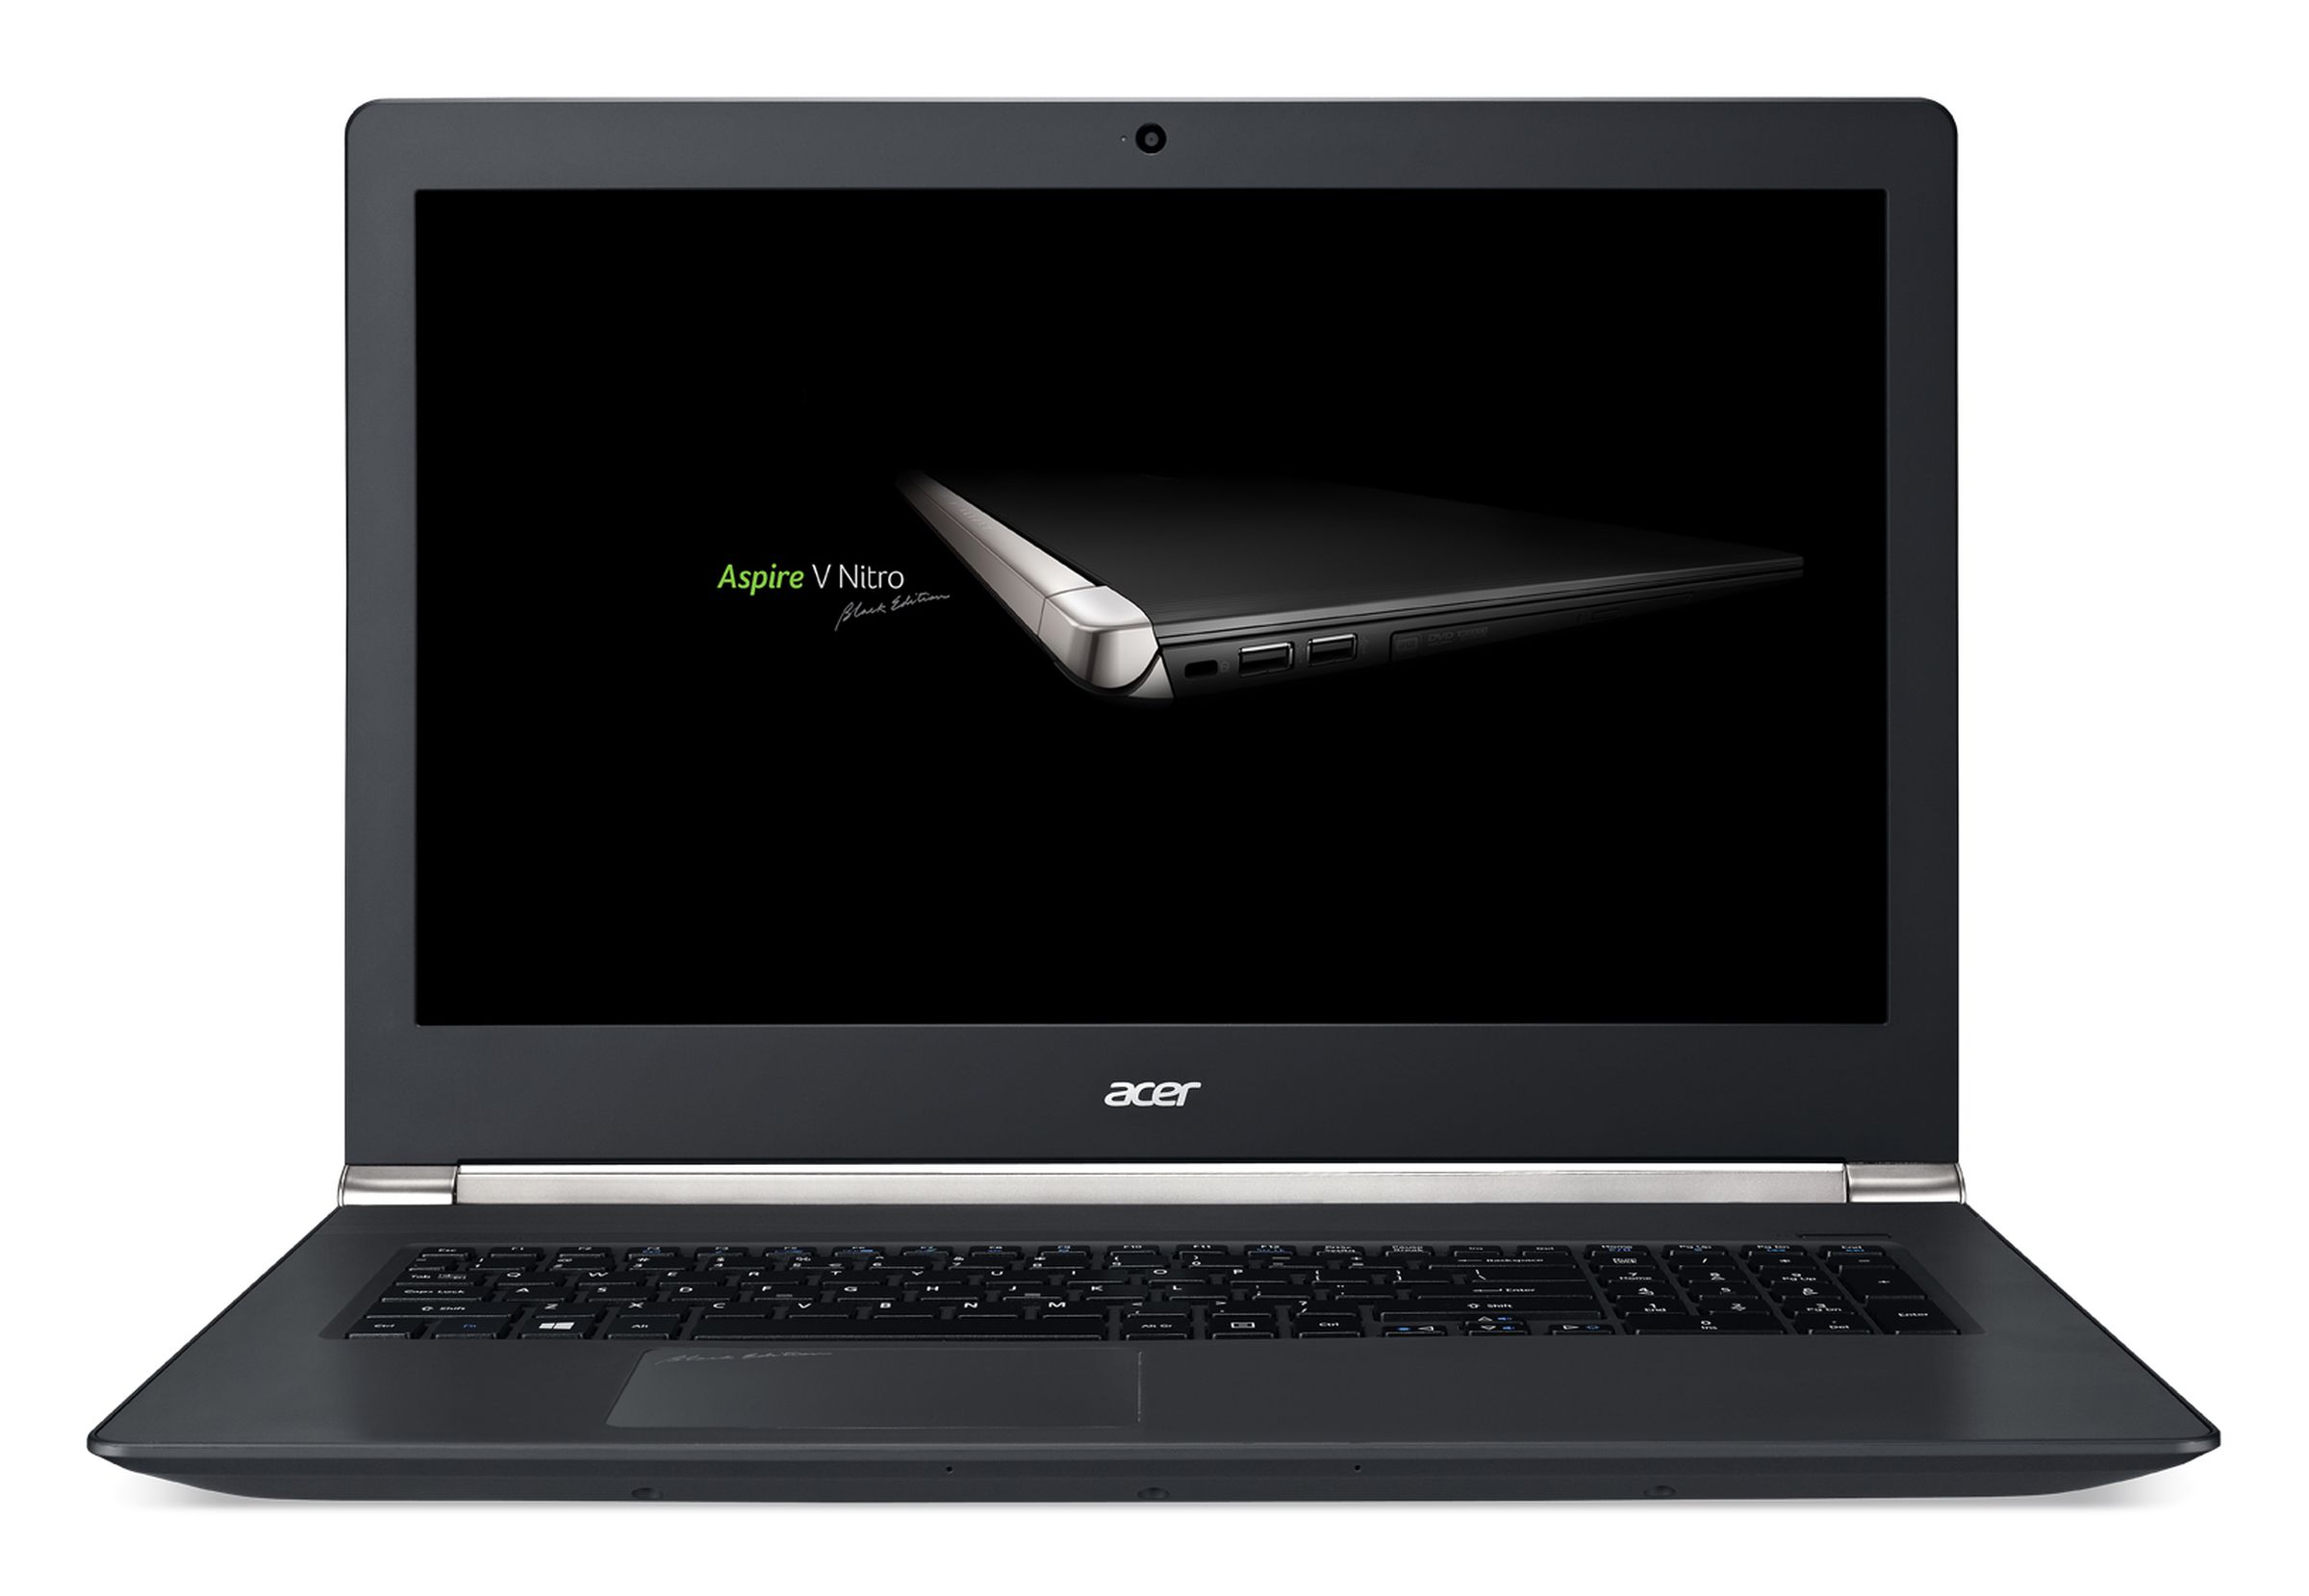 Acer Aspire V 17 Nitro pictures